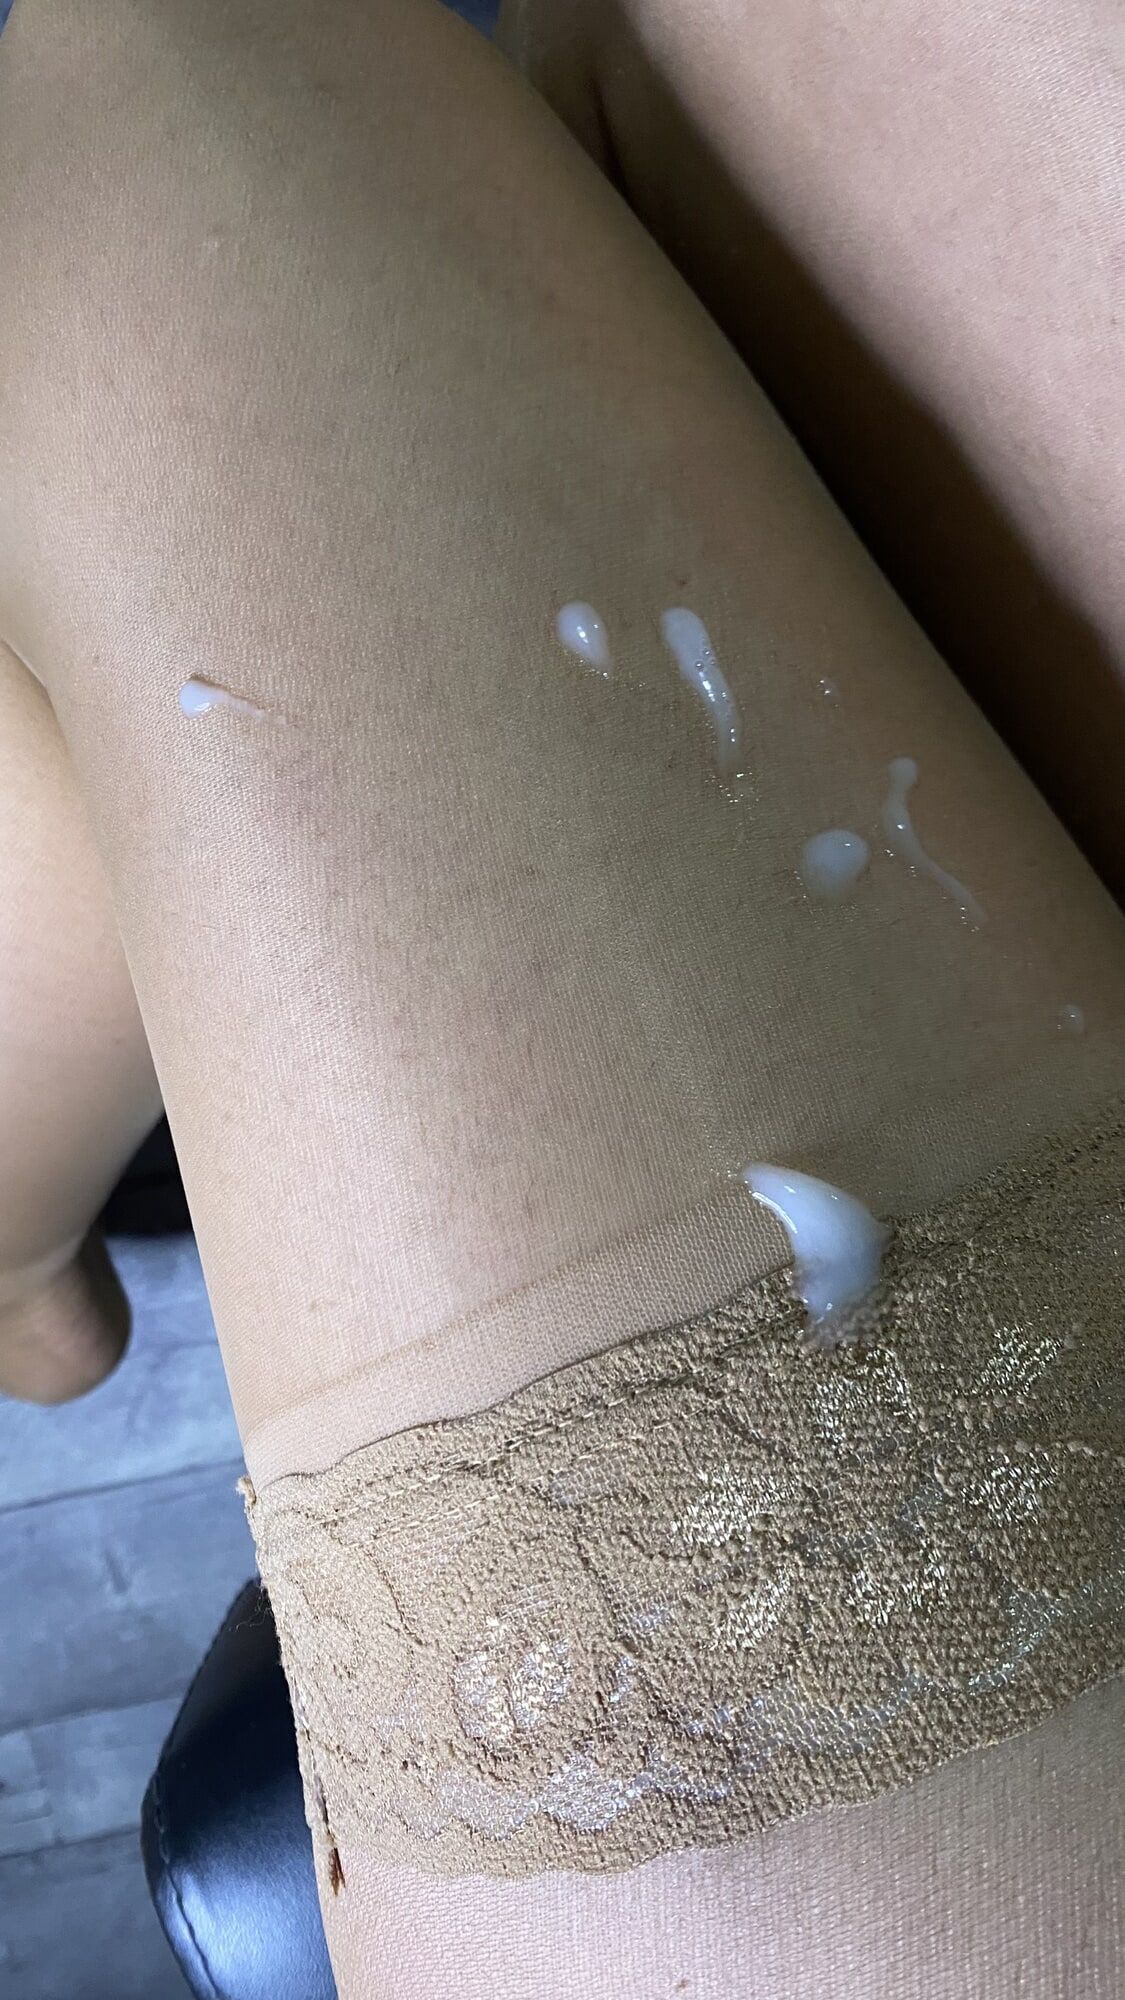 Cum on my legs in pantyhose